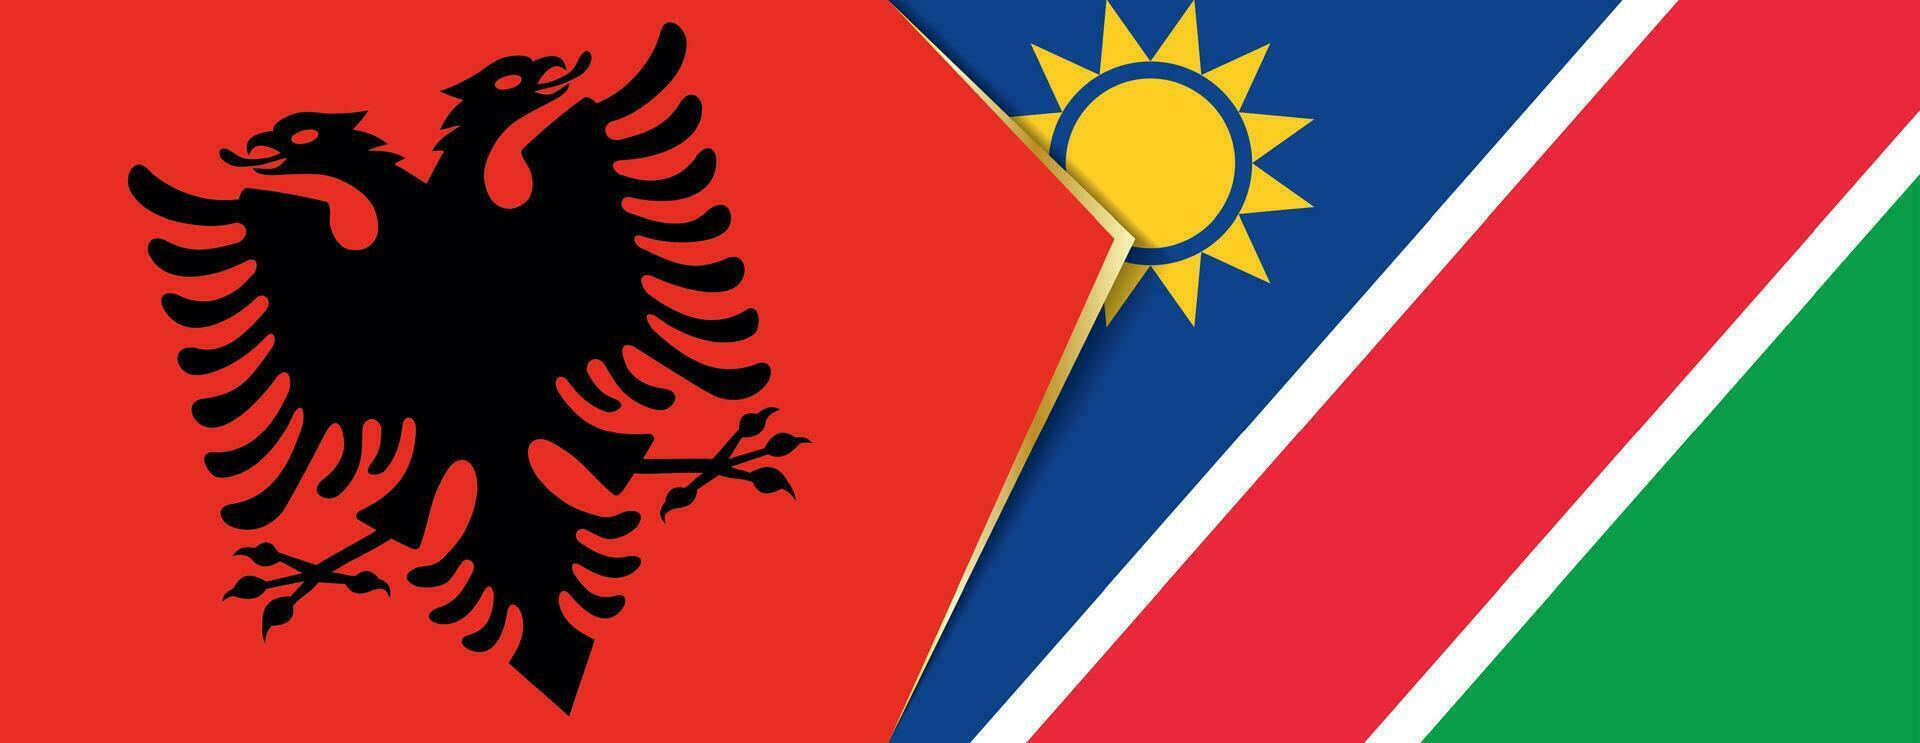 albania och namibia flaggor, två vektor flaggor.